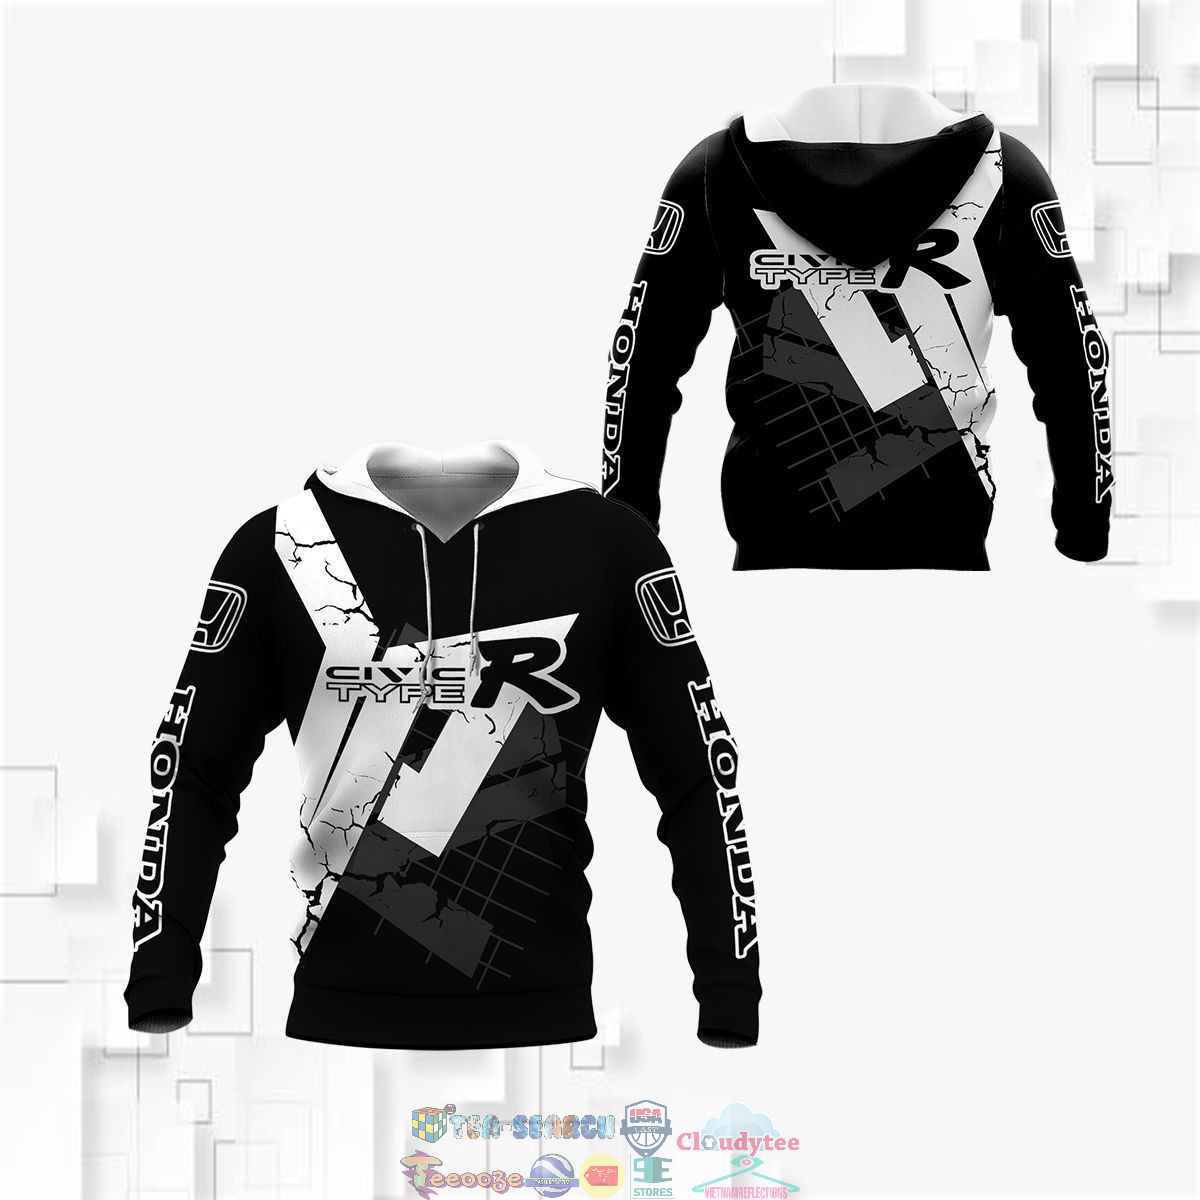 Honda Civic Type R ver 1 3D hoodie and t-shirt – Saleoff